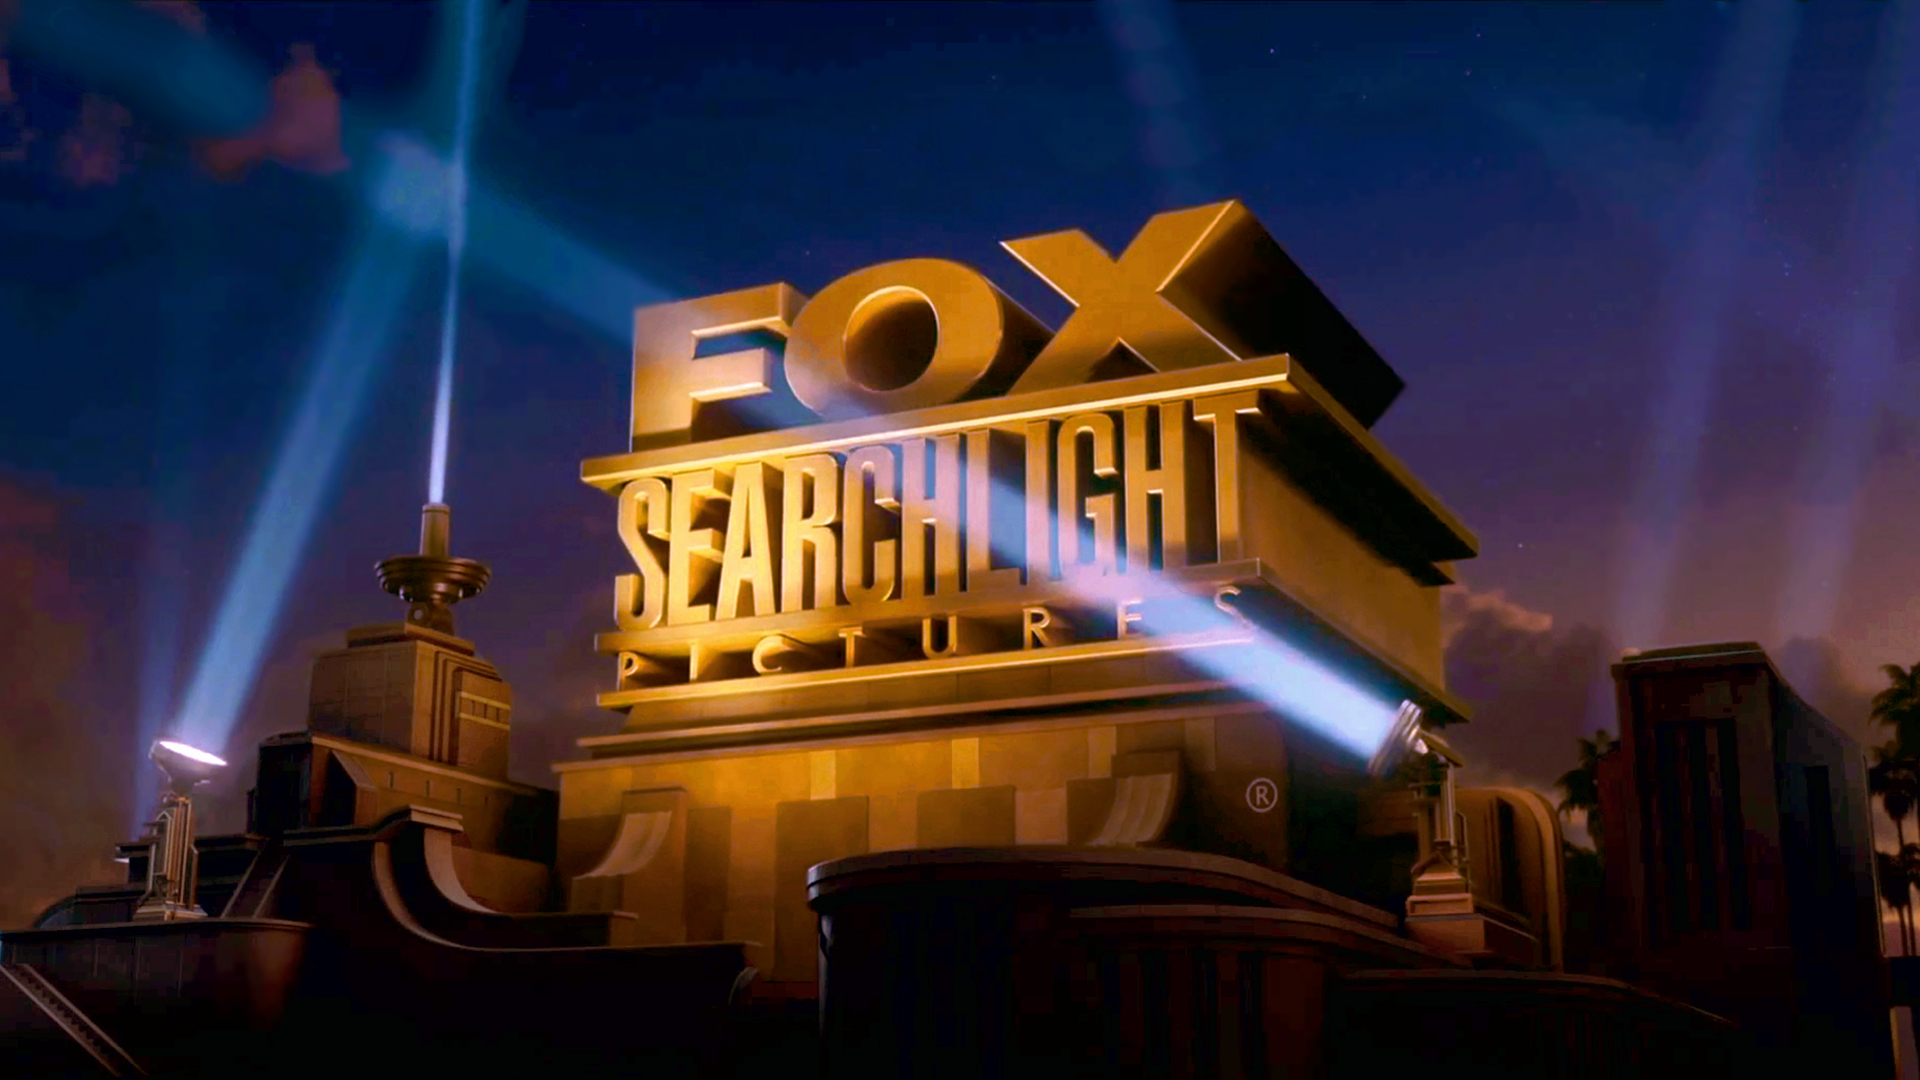 Fox Searchlight